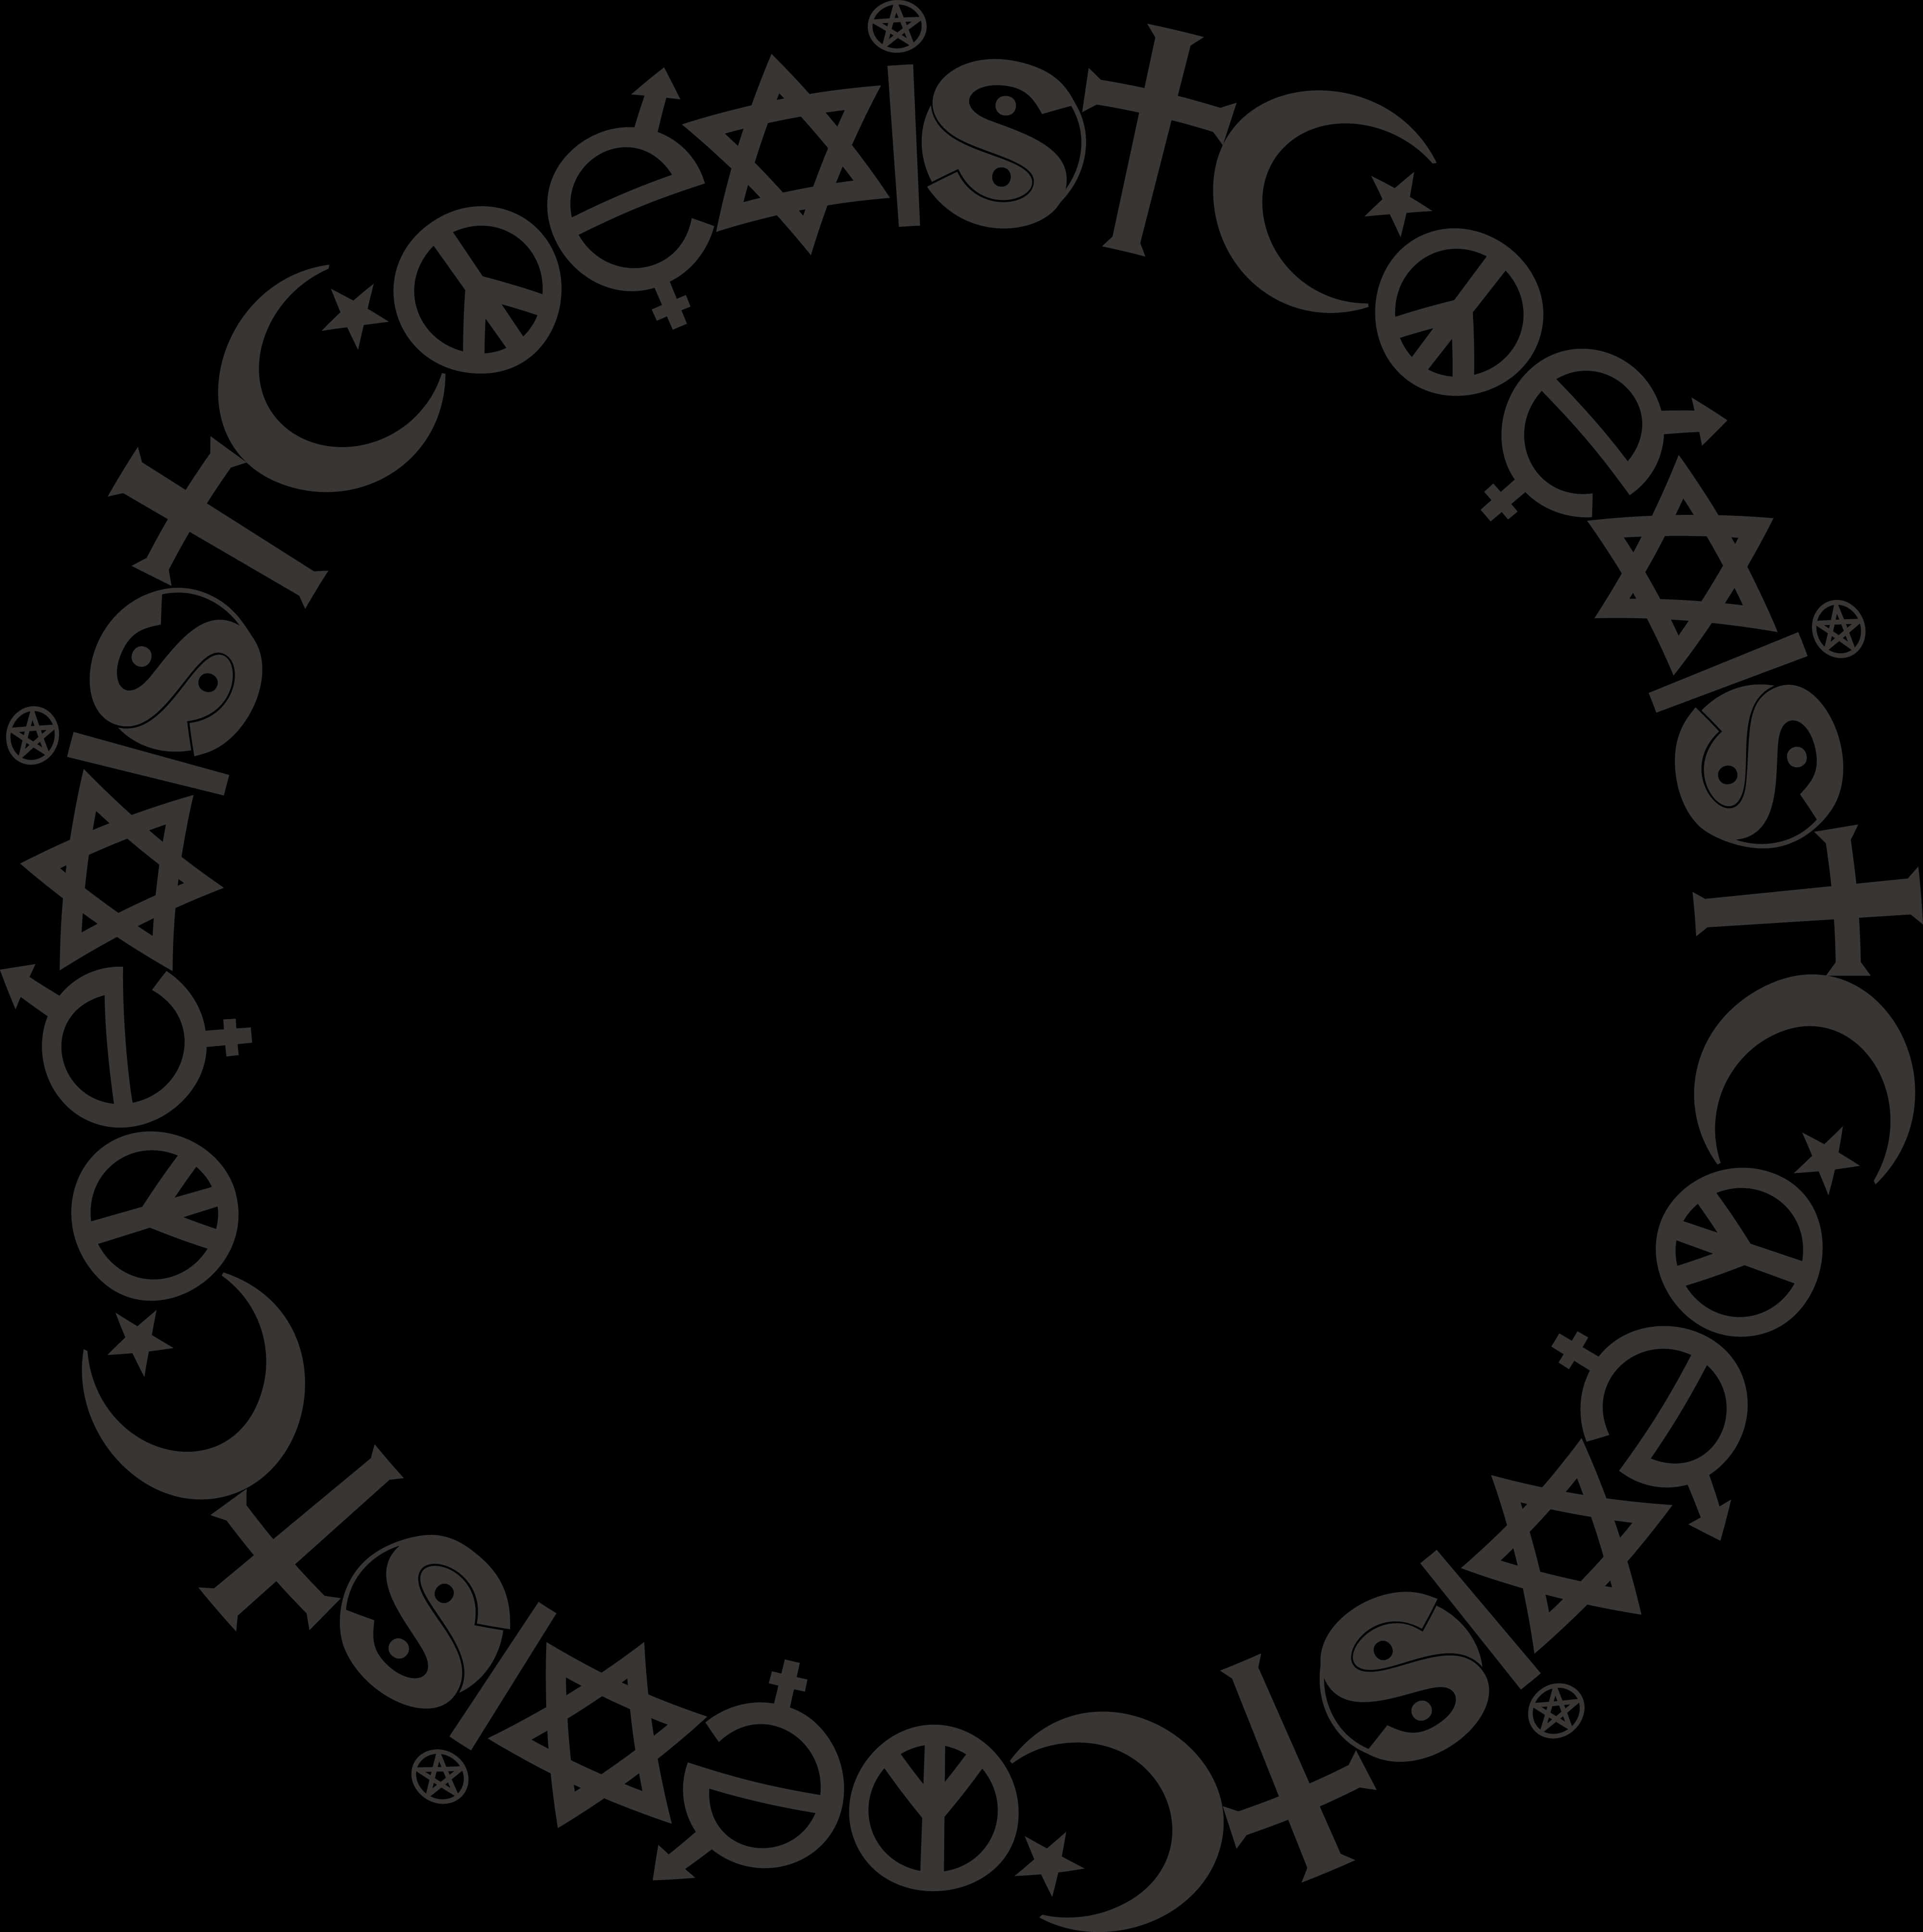 Coexist Symbols Round Frame PNG image